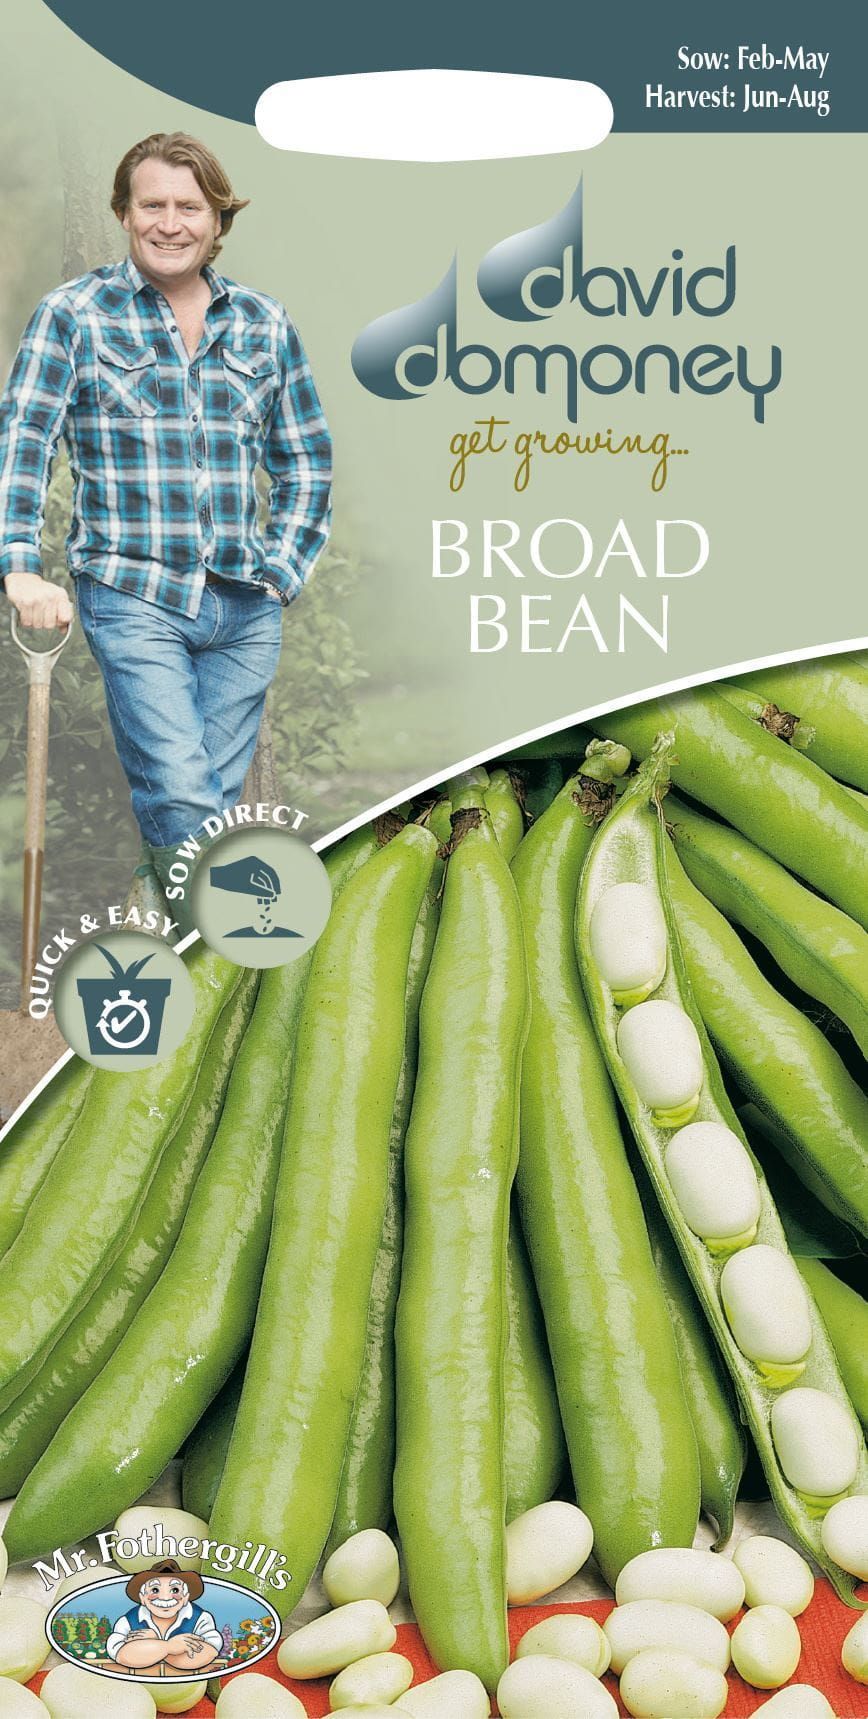 Mr Fothergills - David Domoney - Vegetable - Broad Bean - Vectra - 40 Seeds